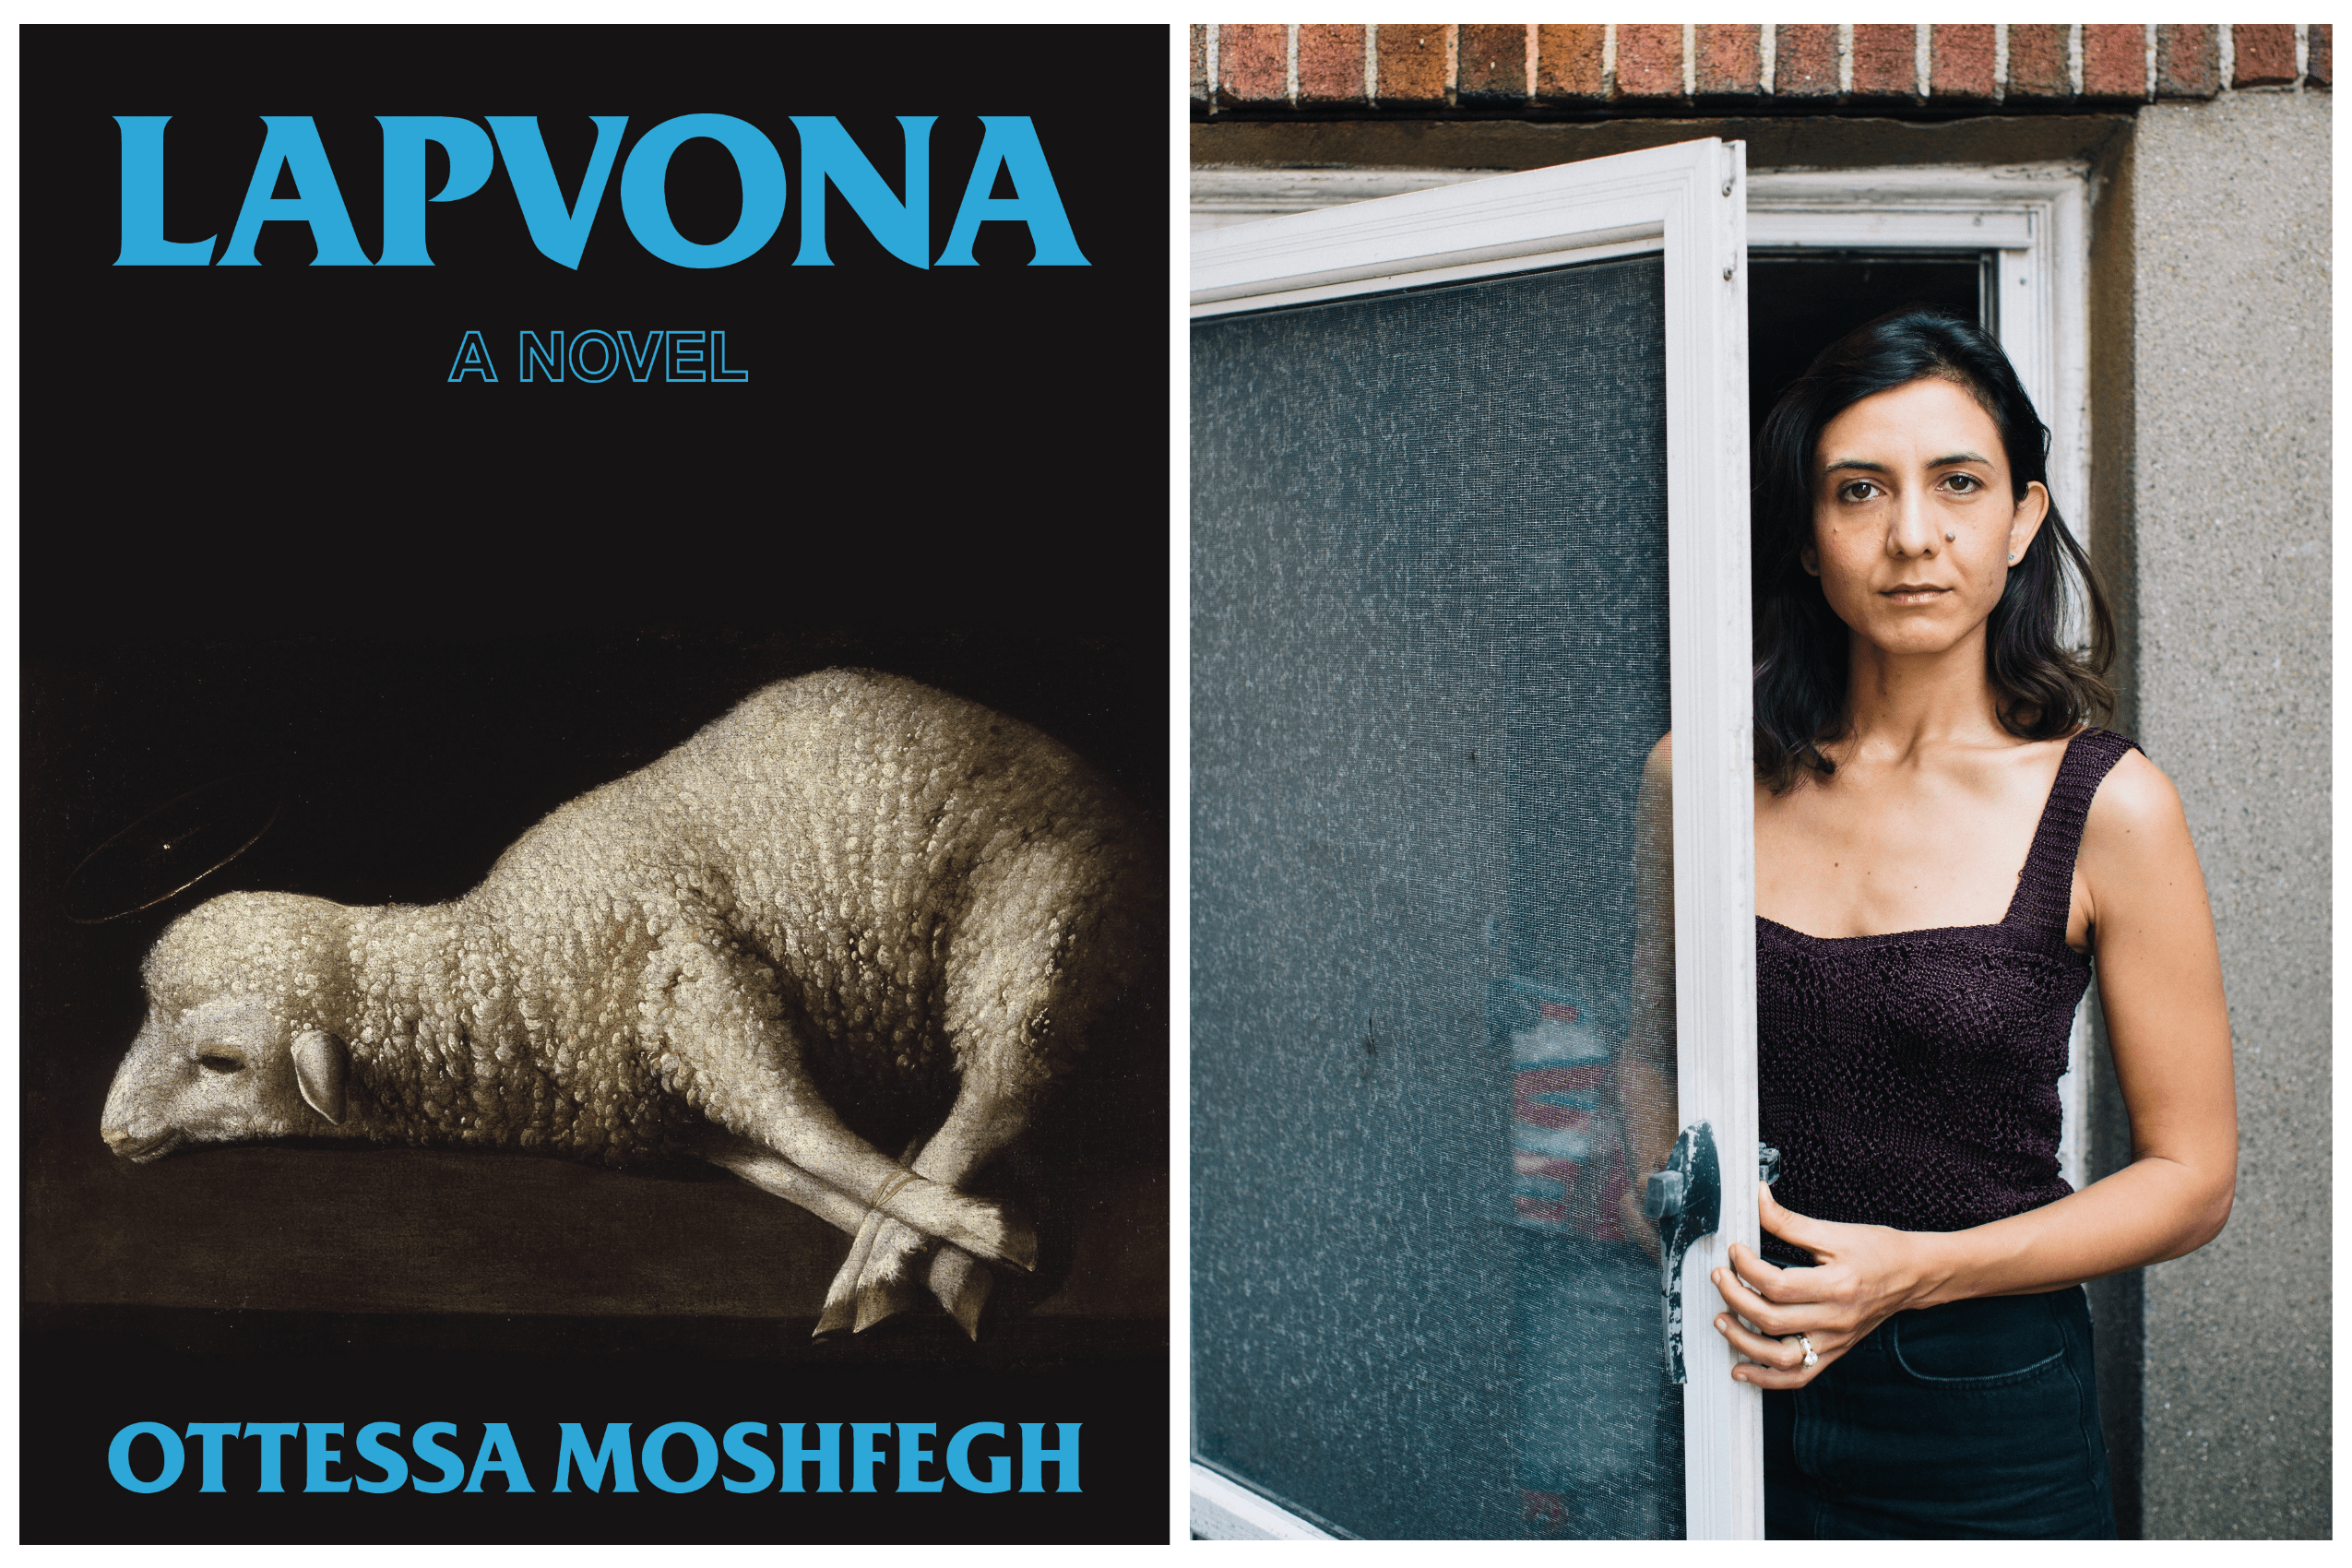 Ottessa Moshfegh's latest book is &quot;Lapvona.&quot; (Courtesy Penguin Press/Jack Belcher)